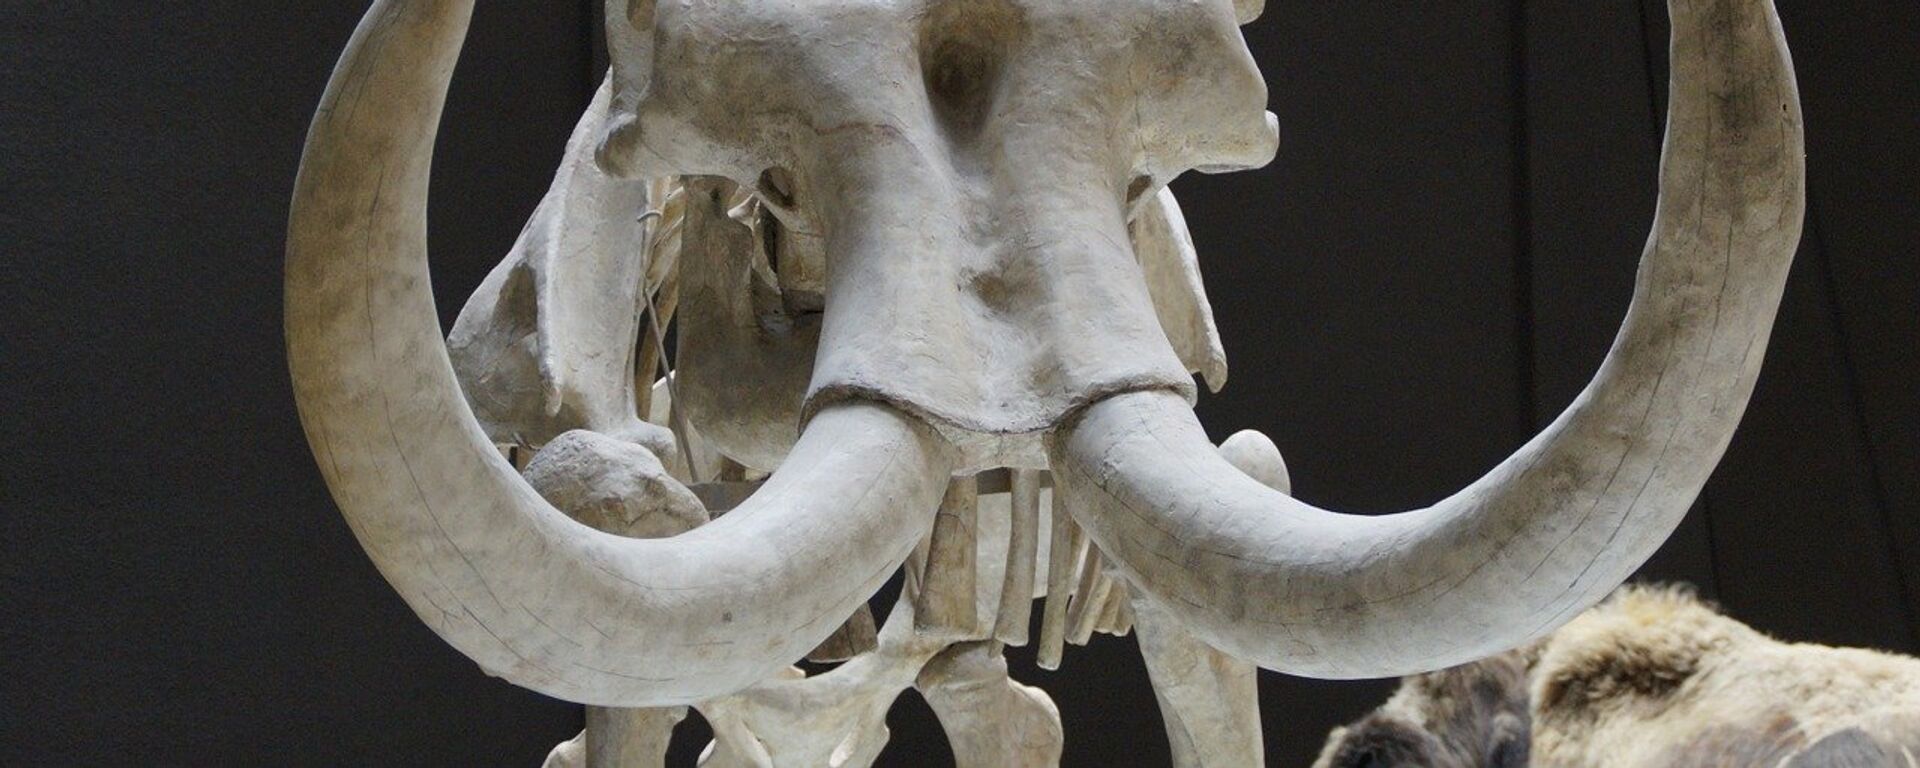 El esqueleto de un mamut  - Sputnik Mundo, 1920, 06.03.2021